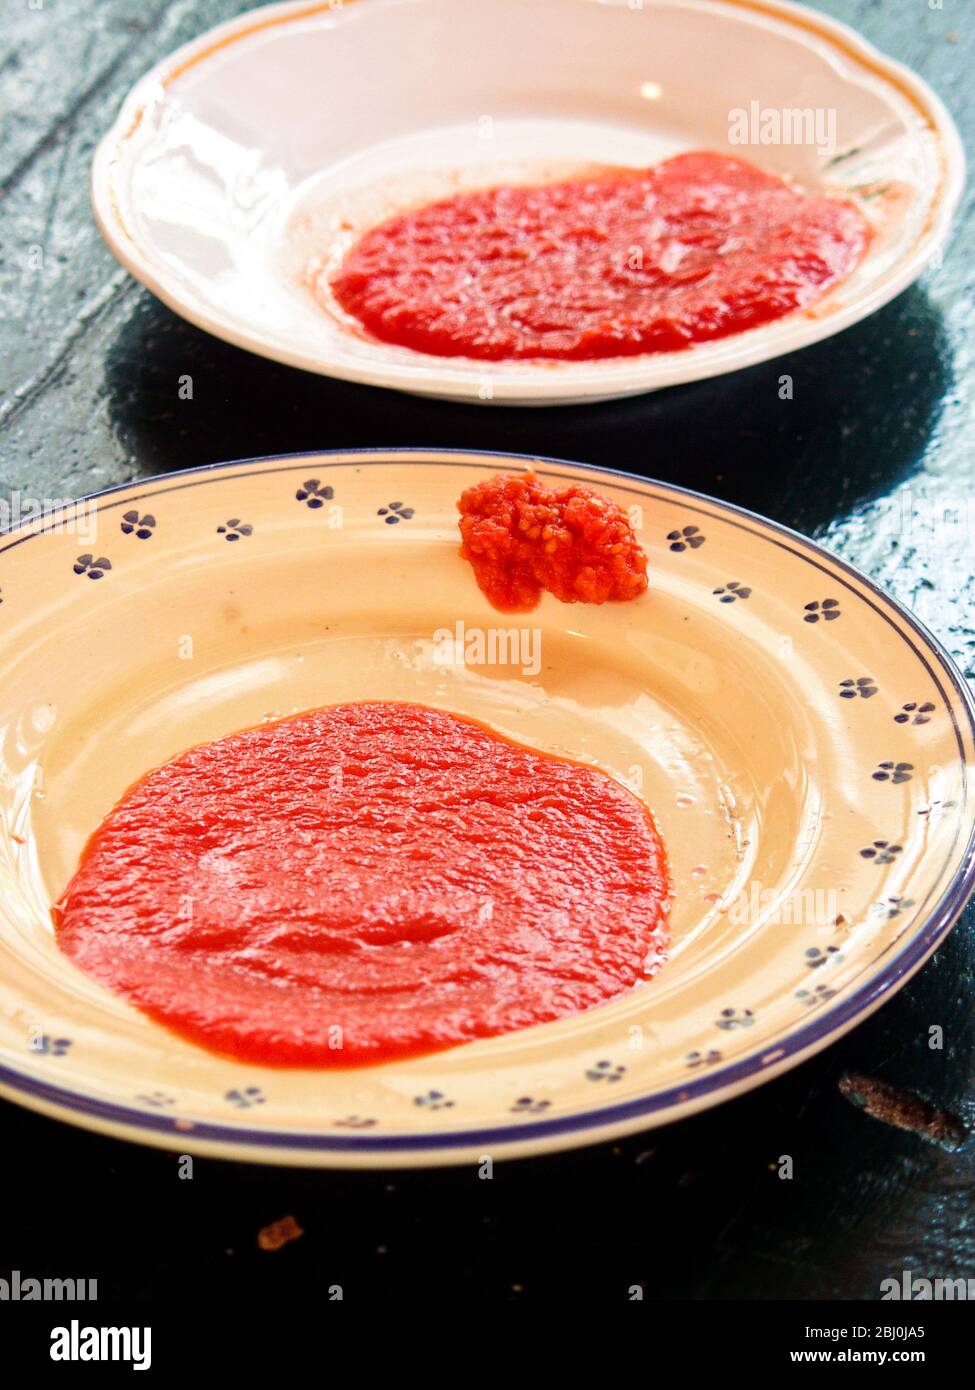 Zwei Sorten Tomatenmark - Passata und Passata Rustico auf italienischen Tellern - Stockfoto